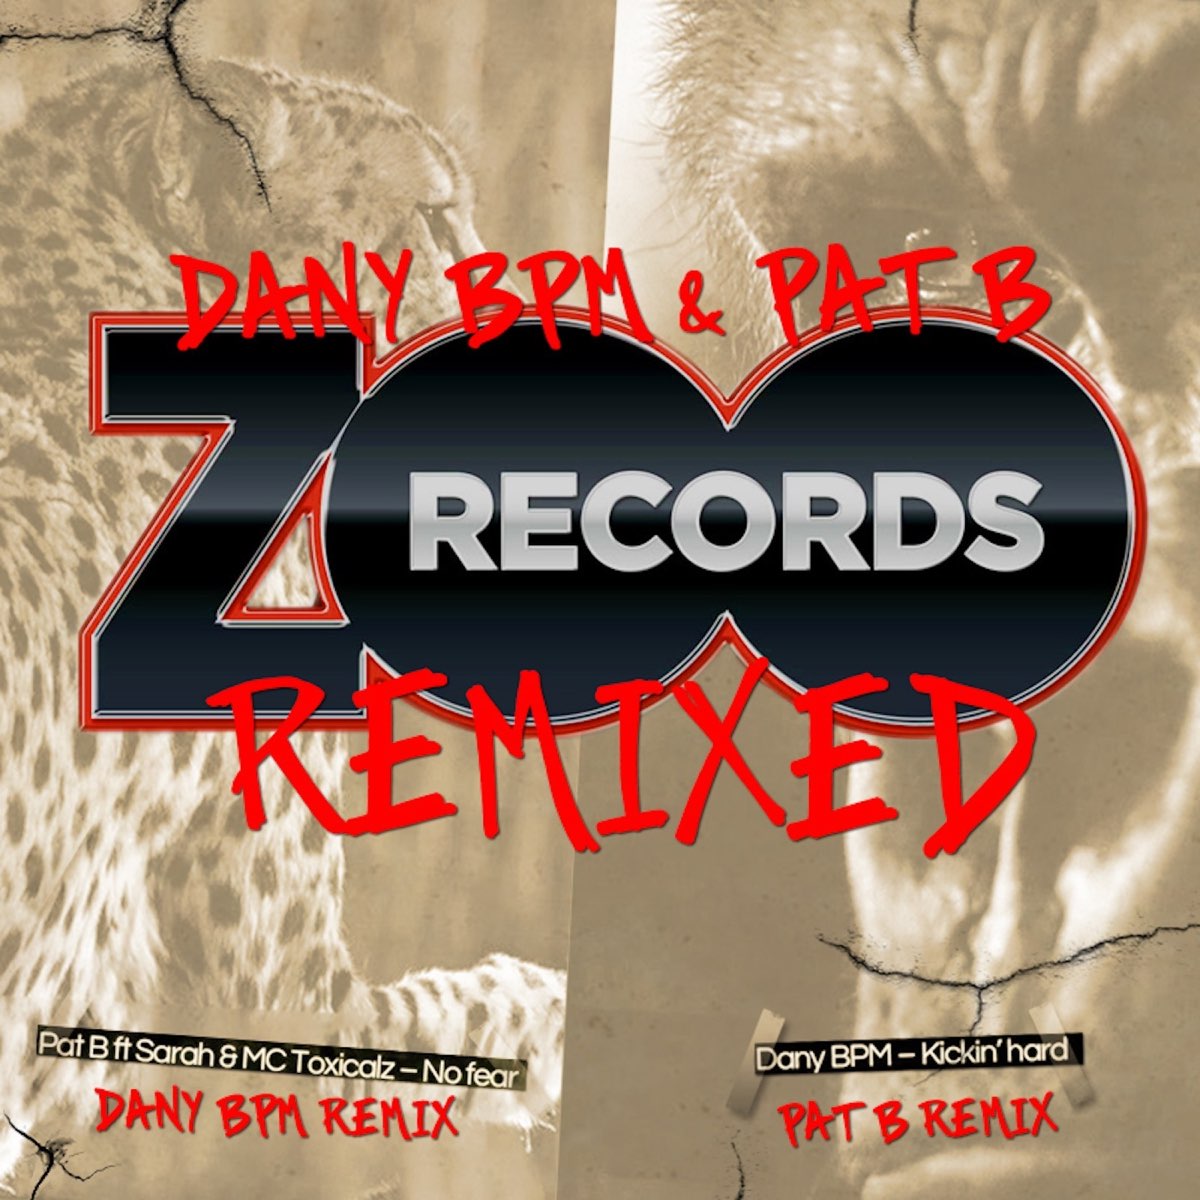 Heroine feat toza pat b remix. Рекорд зоо. Ремикс на рекорд хиты. Heroin(Pat b Remix)-Dutch Disorder. Neroine (feat. Toza) [(Pat b Remix) [toza Edit]].